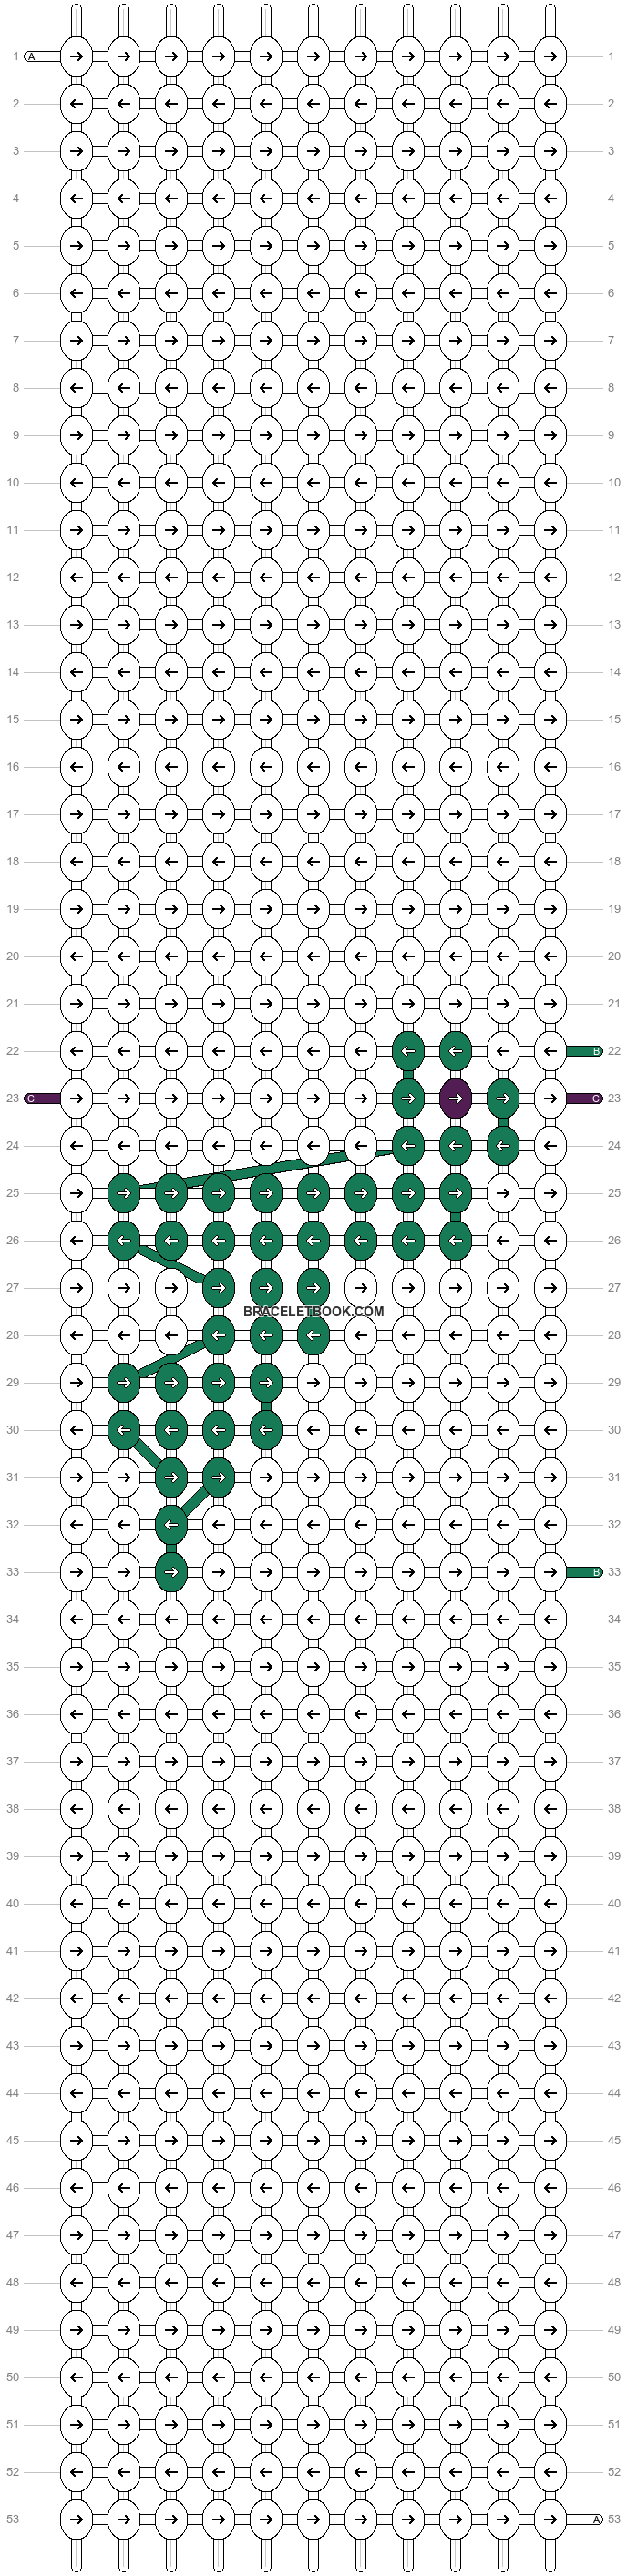 Alpha pattern #59132 variation #119526 pattern